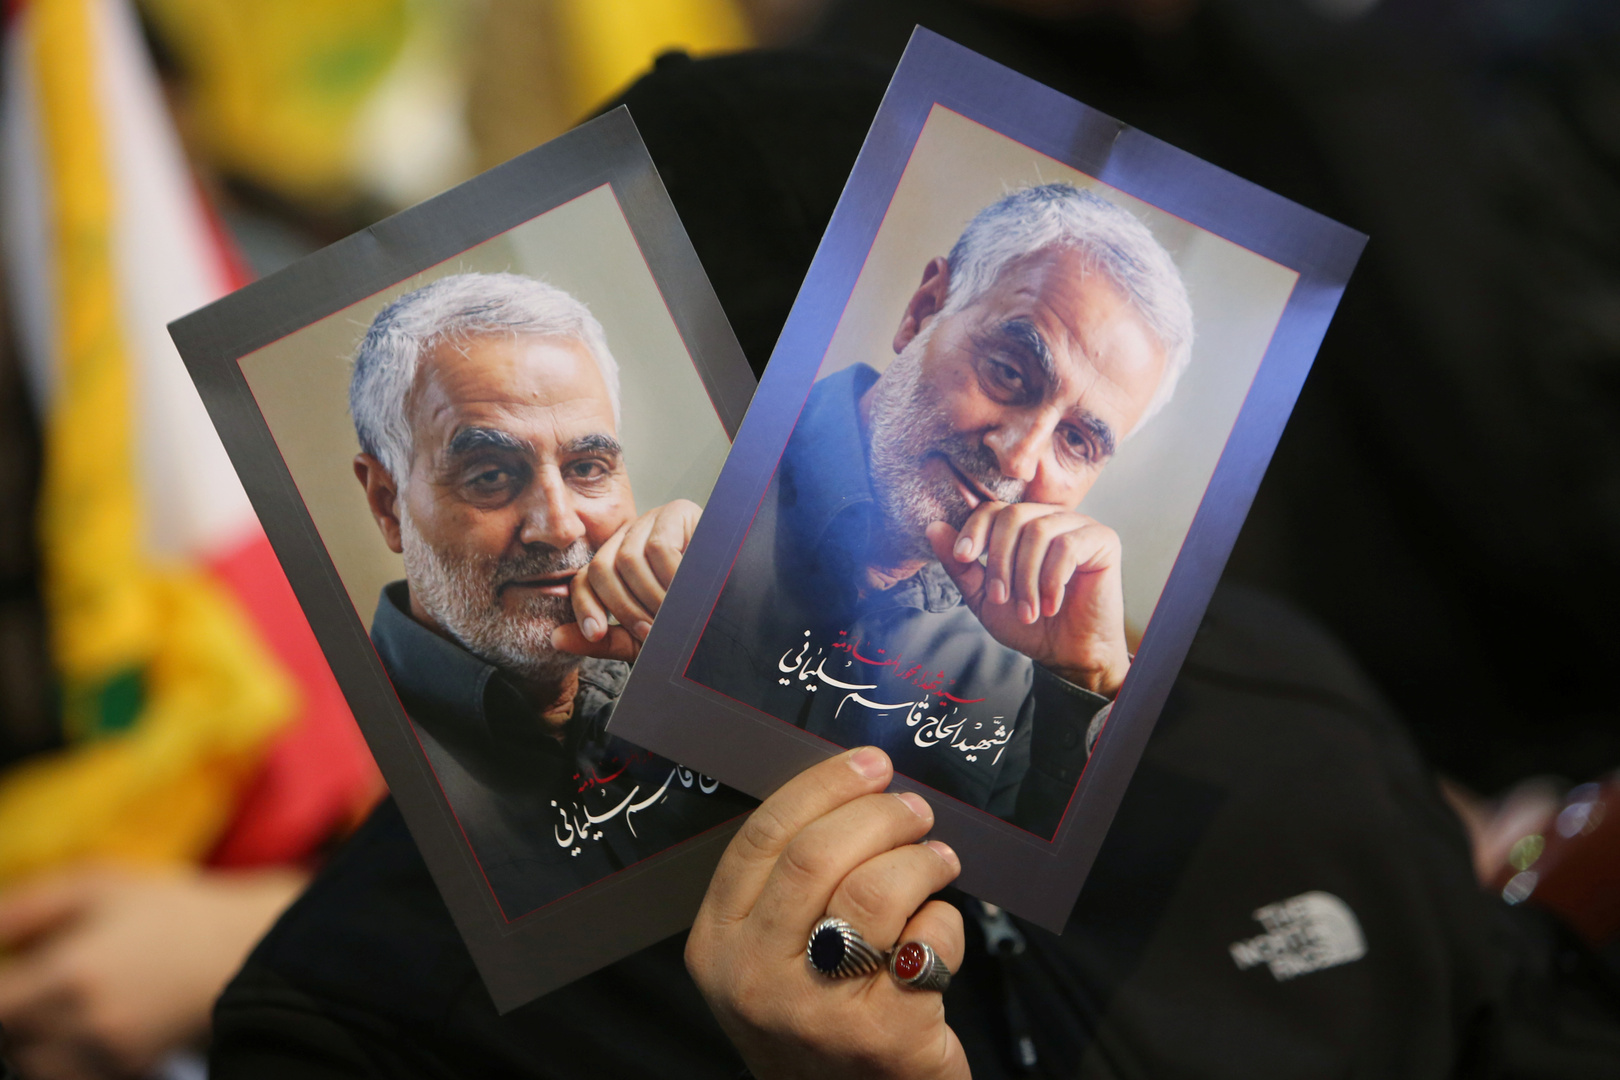 طهران: سنصدر قريبا لائحة الاتهام في اغتيال سليماني ورفاقه